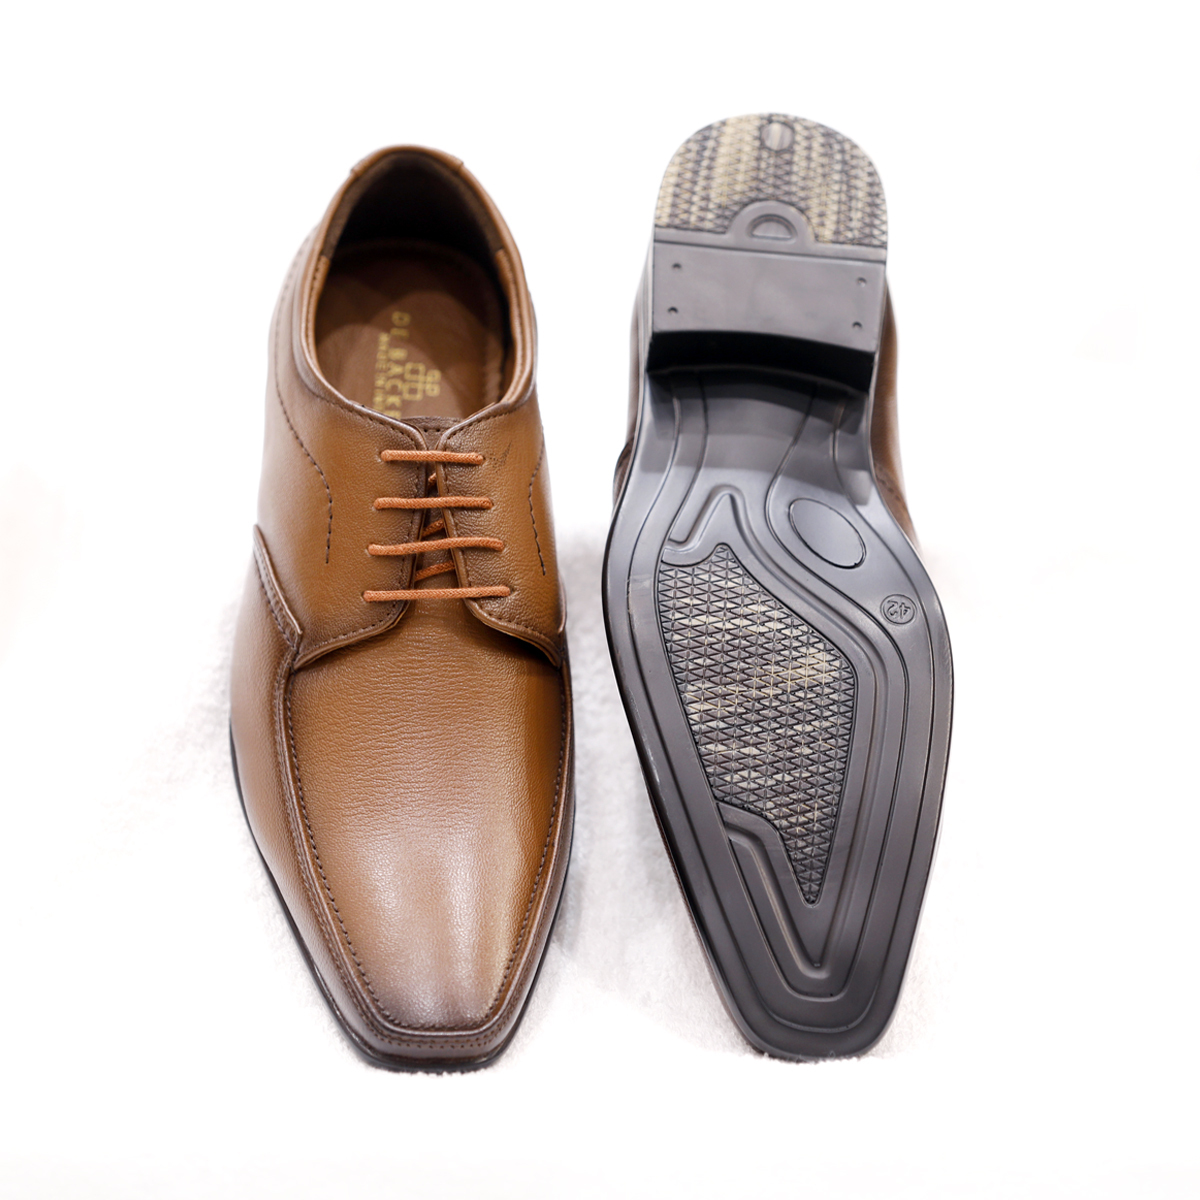 Debackers Mens Formal Shoe 9414